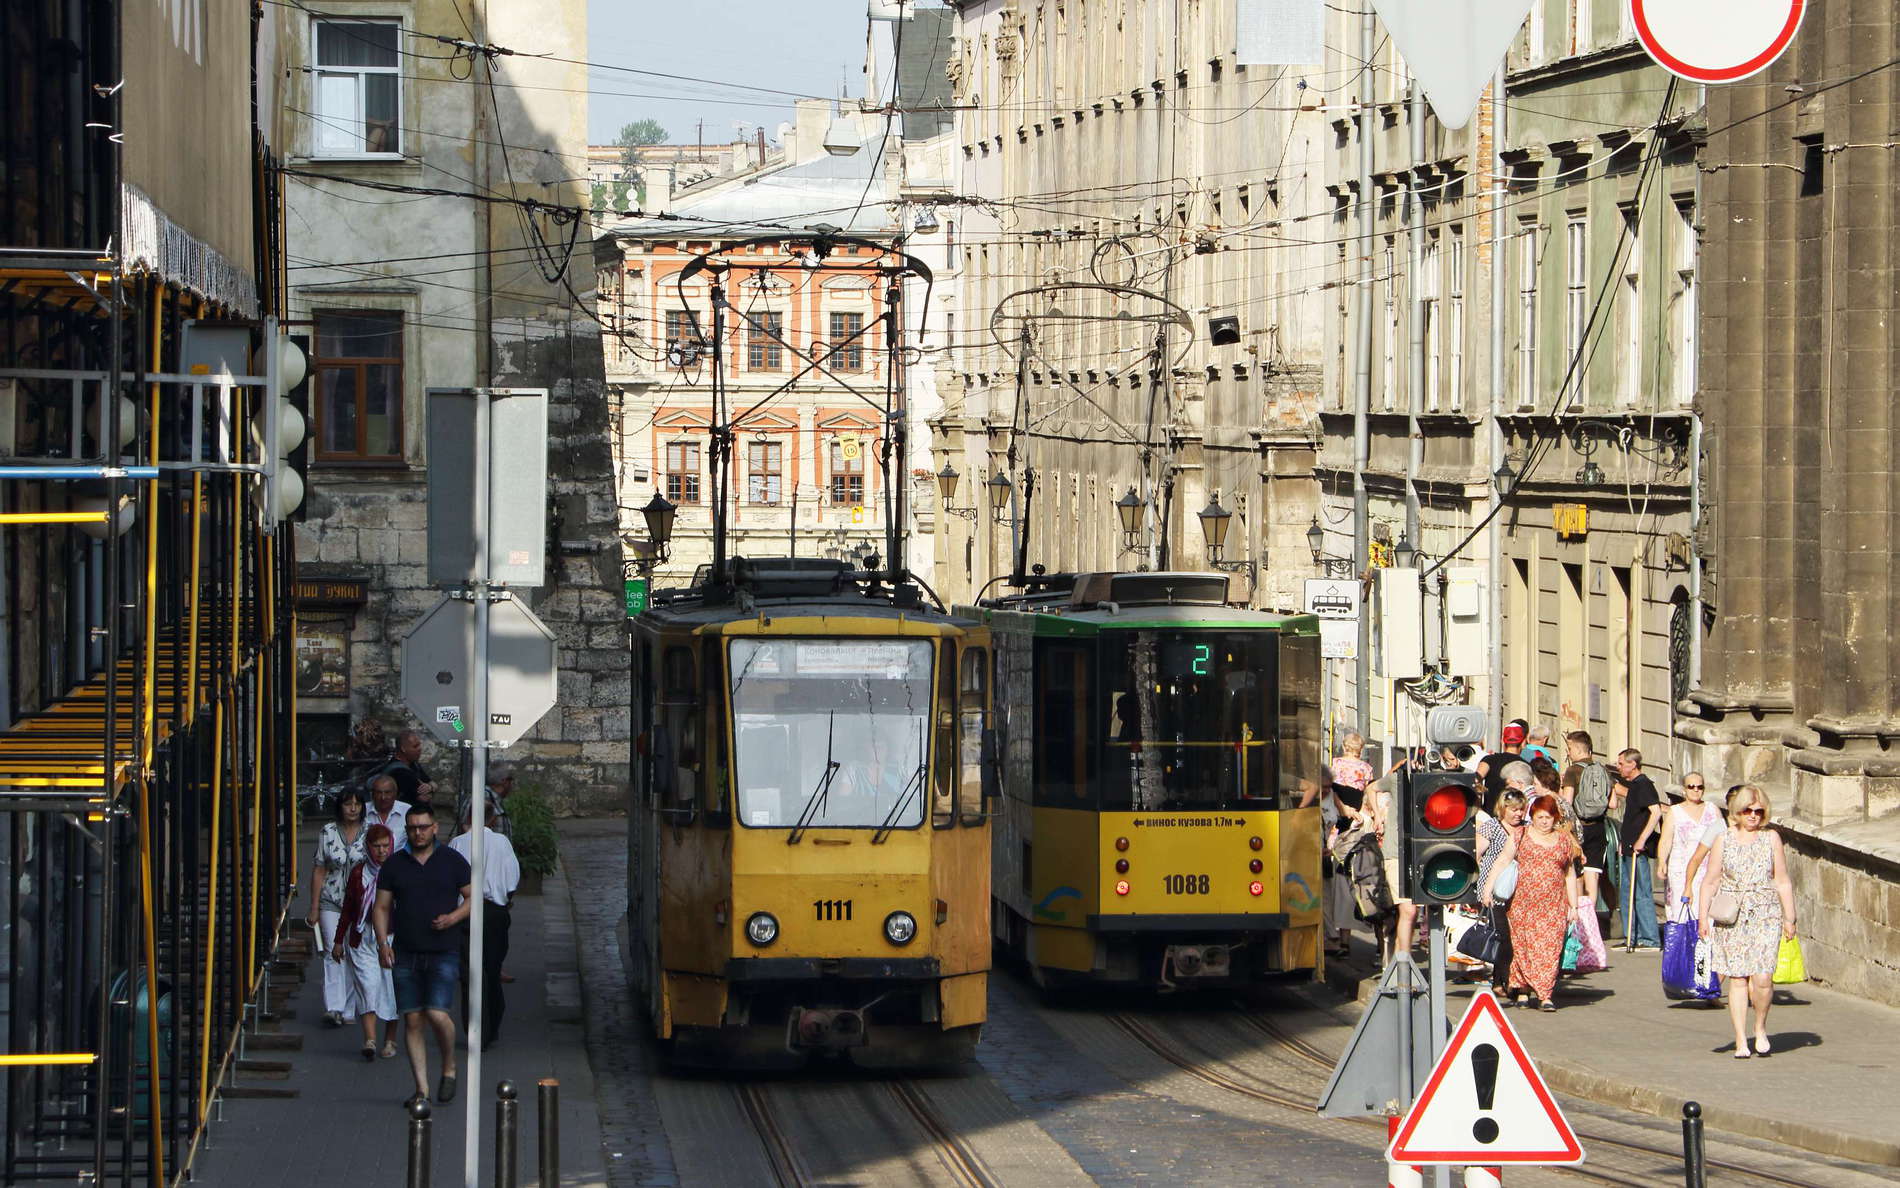 Lviv | Ruska Street with tramways